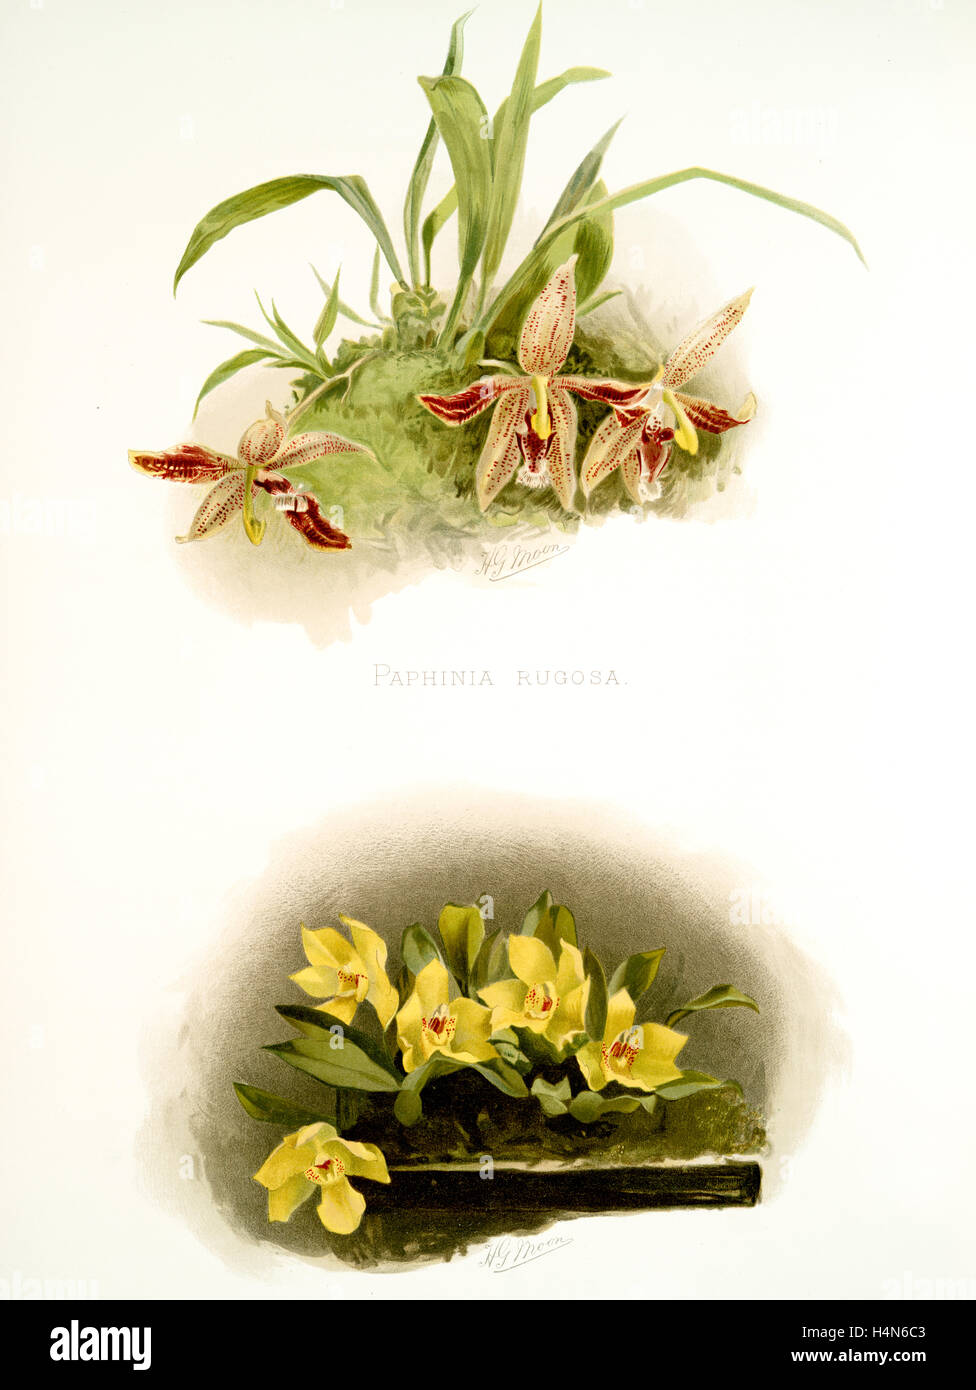 Paphinia rugosa; Zygopetalum xanthinum, Sander, F. (Frederick), 1847-1920, Author, Moon, H. G, Artist, Leutzsch, Gustav Stock Photo